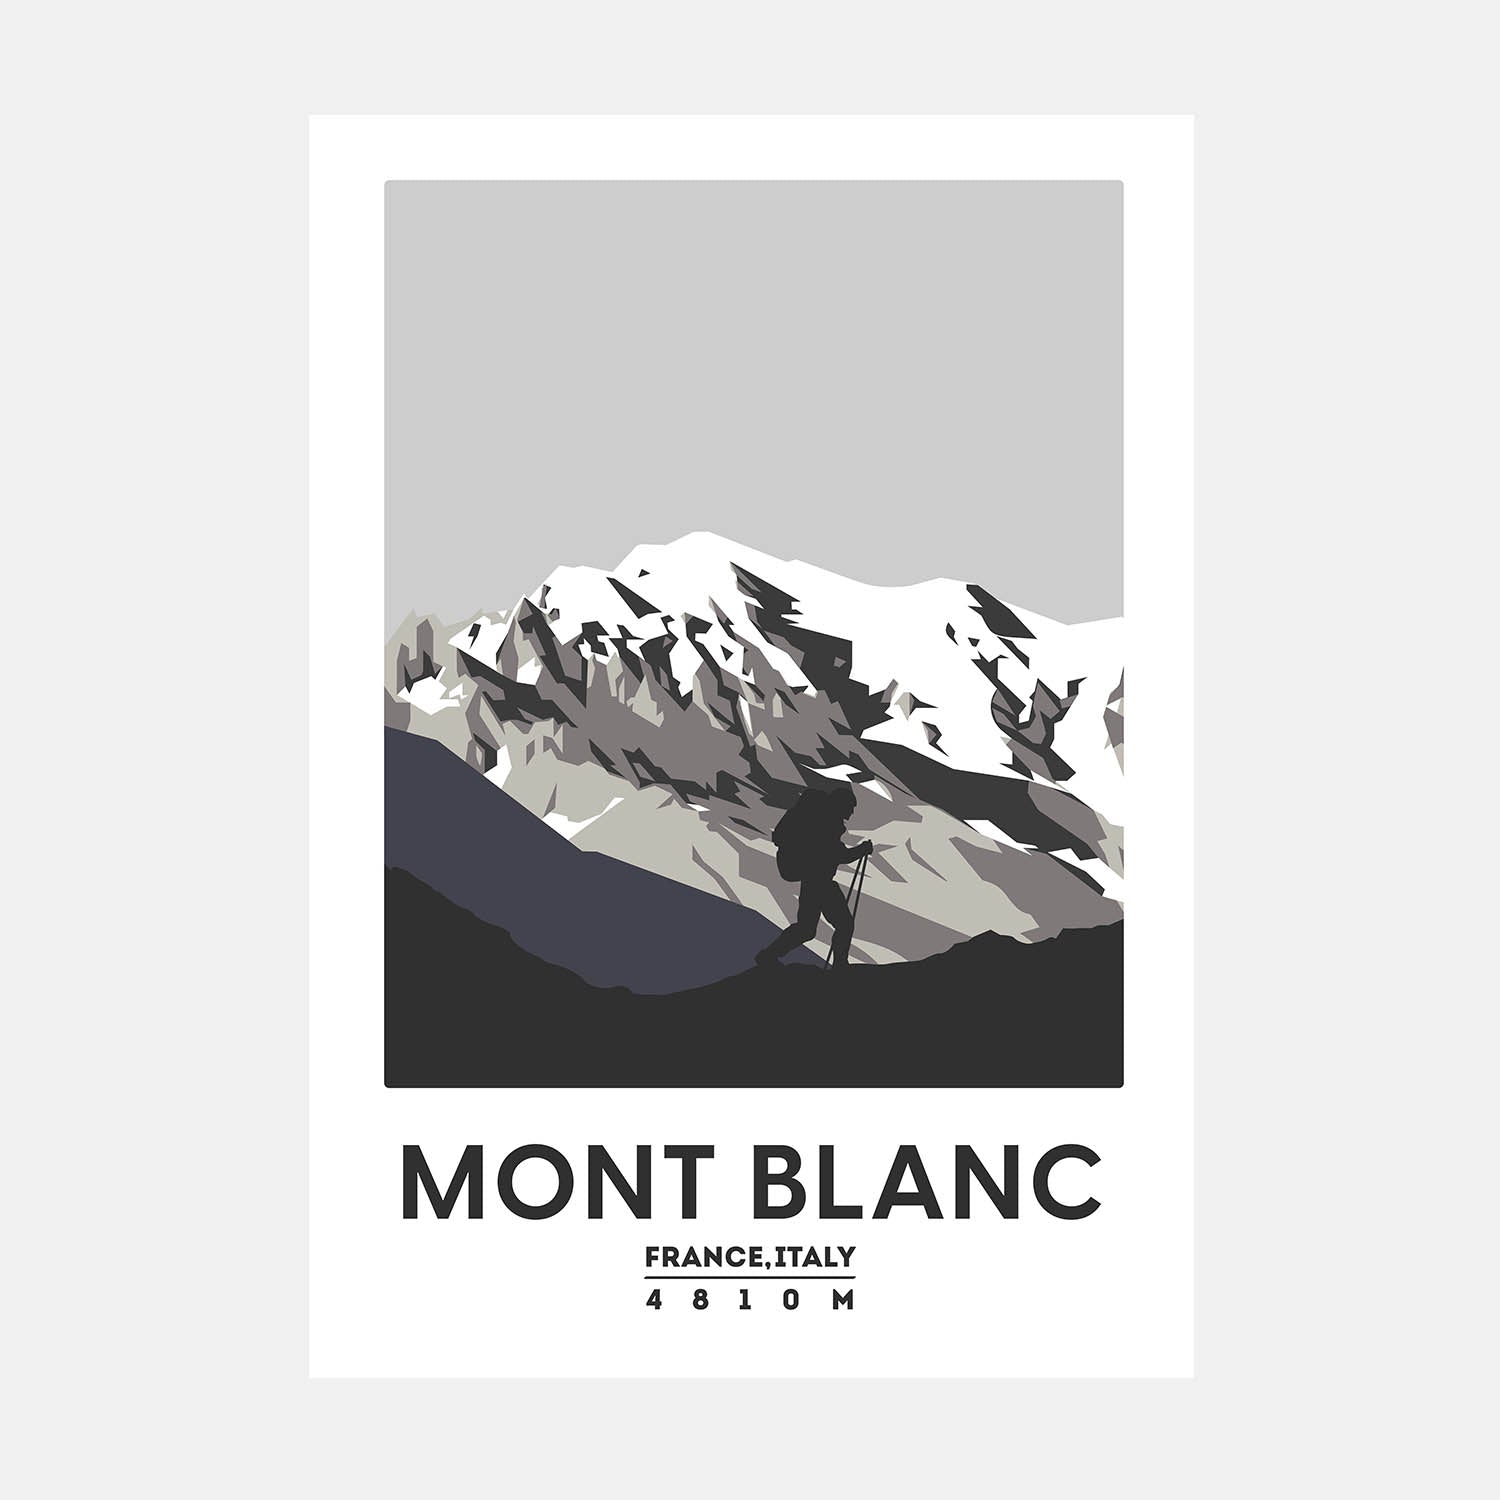 Mont Blanc Adventure Art Print